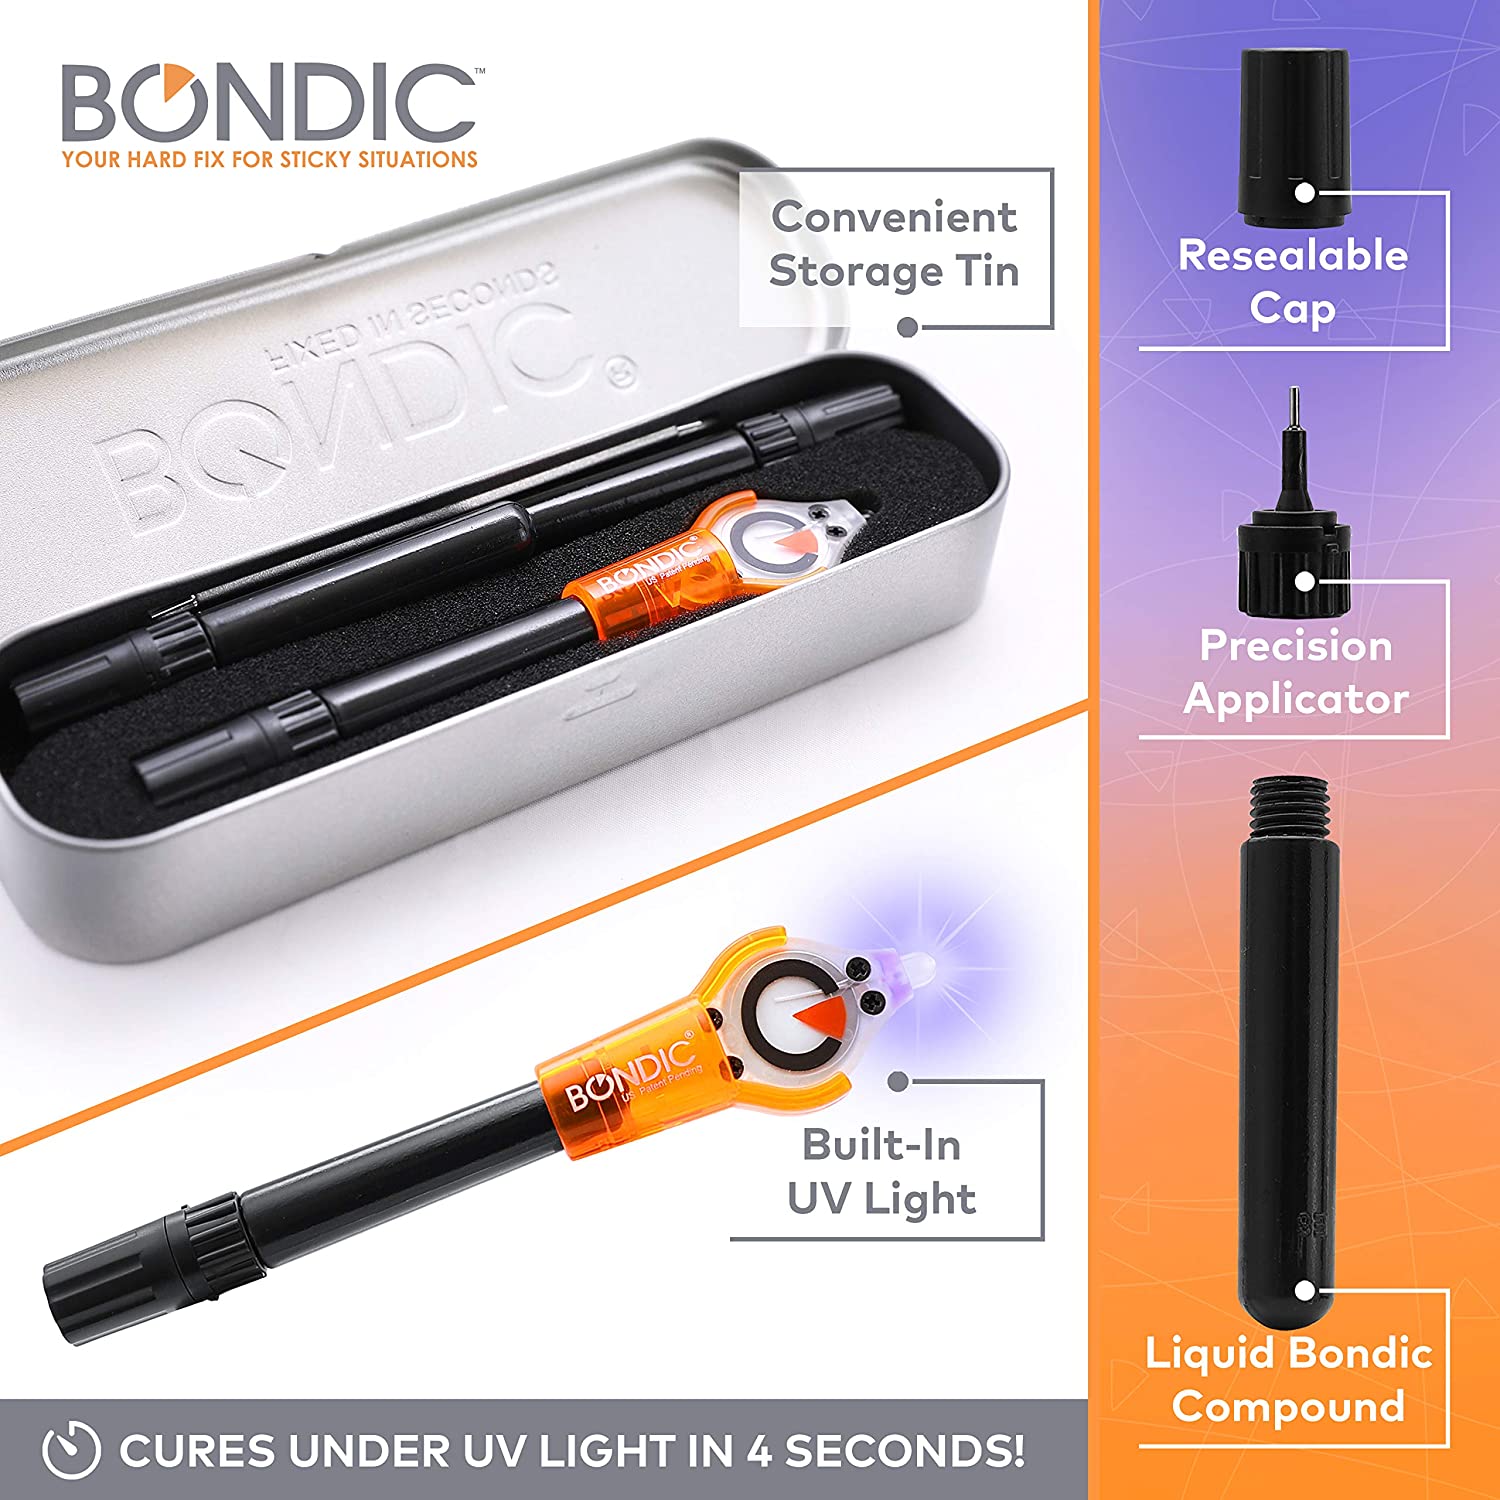 Bondic, A Welder of Liquid Plastic That Hardens Under an LED Ultraviolet  Light